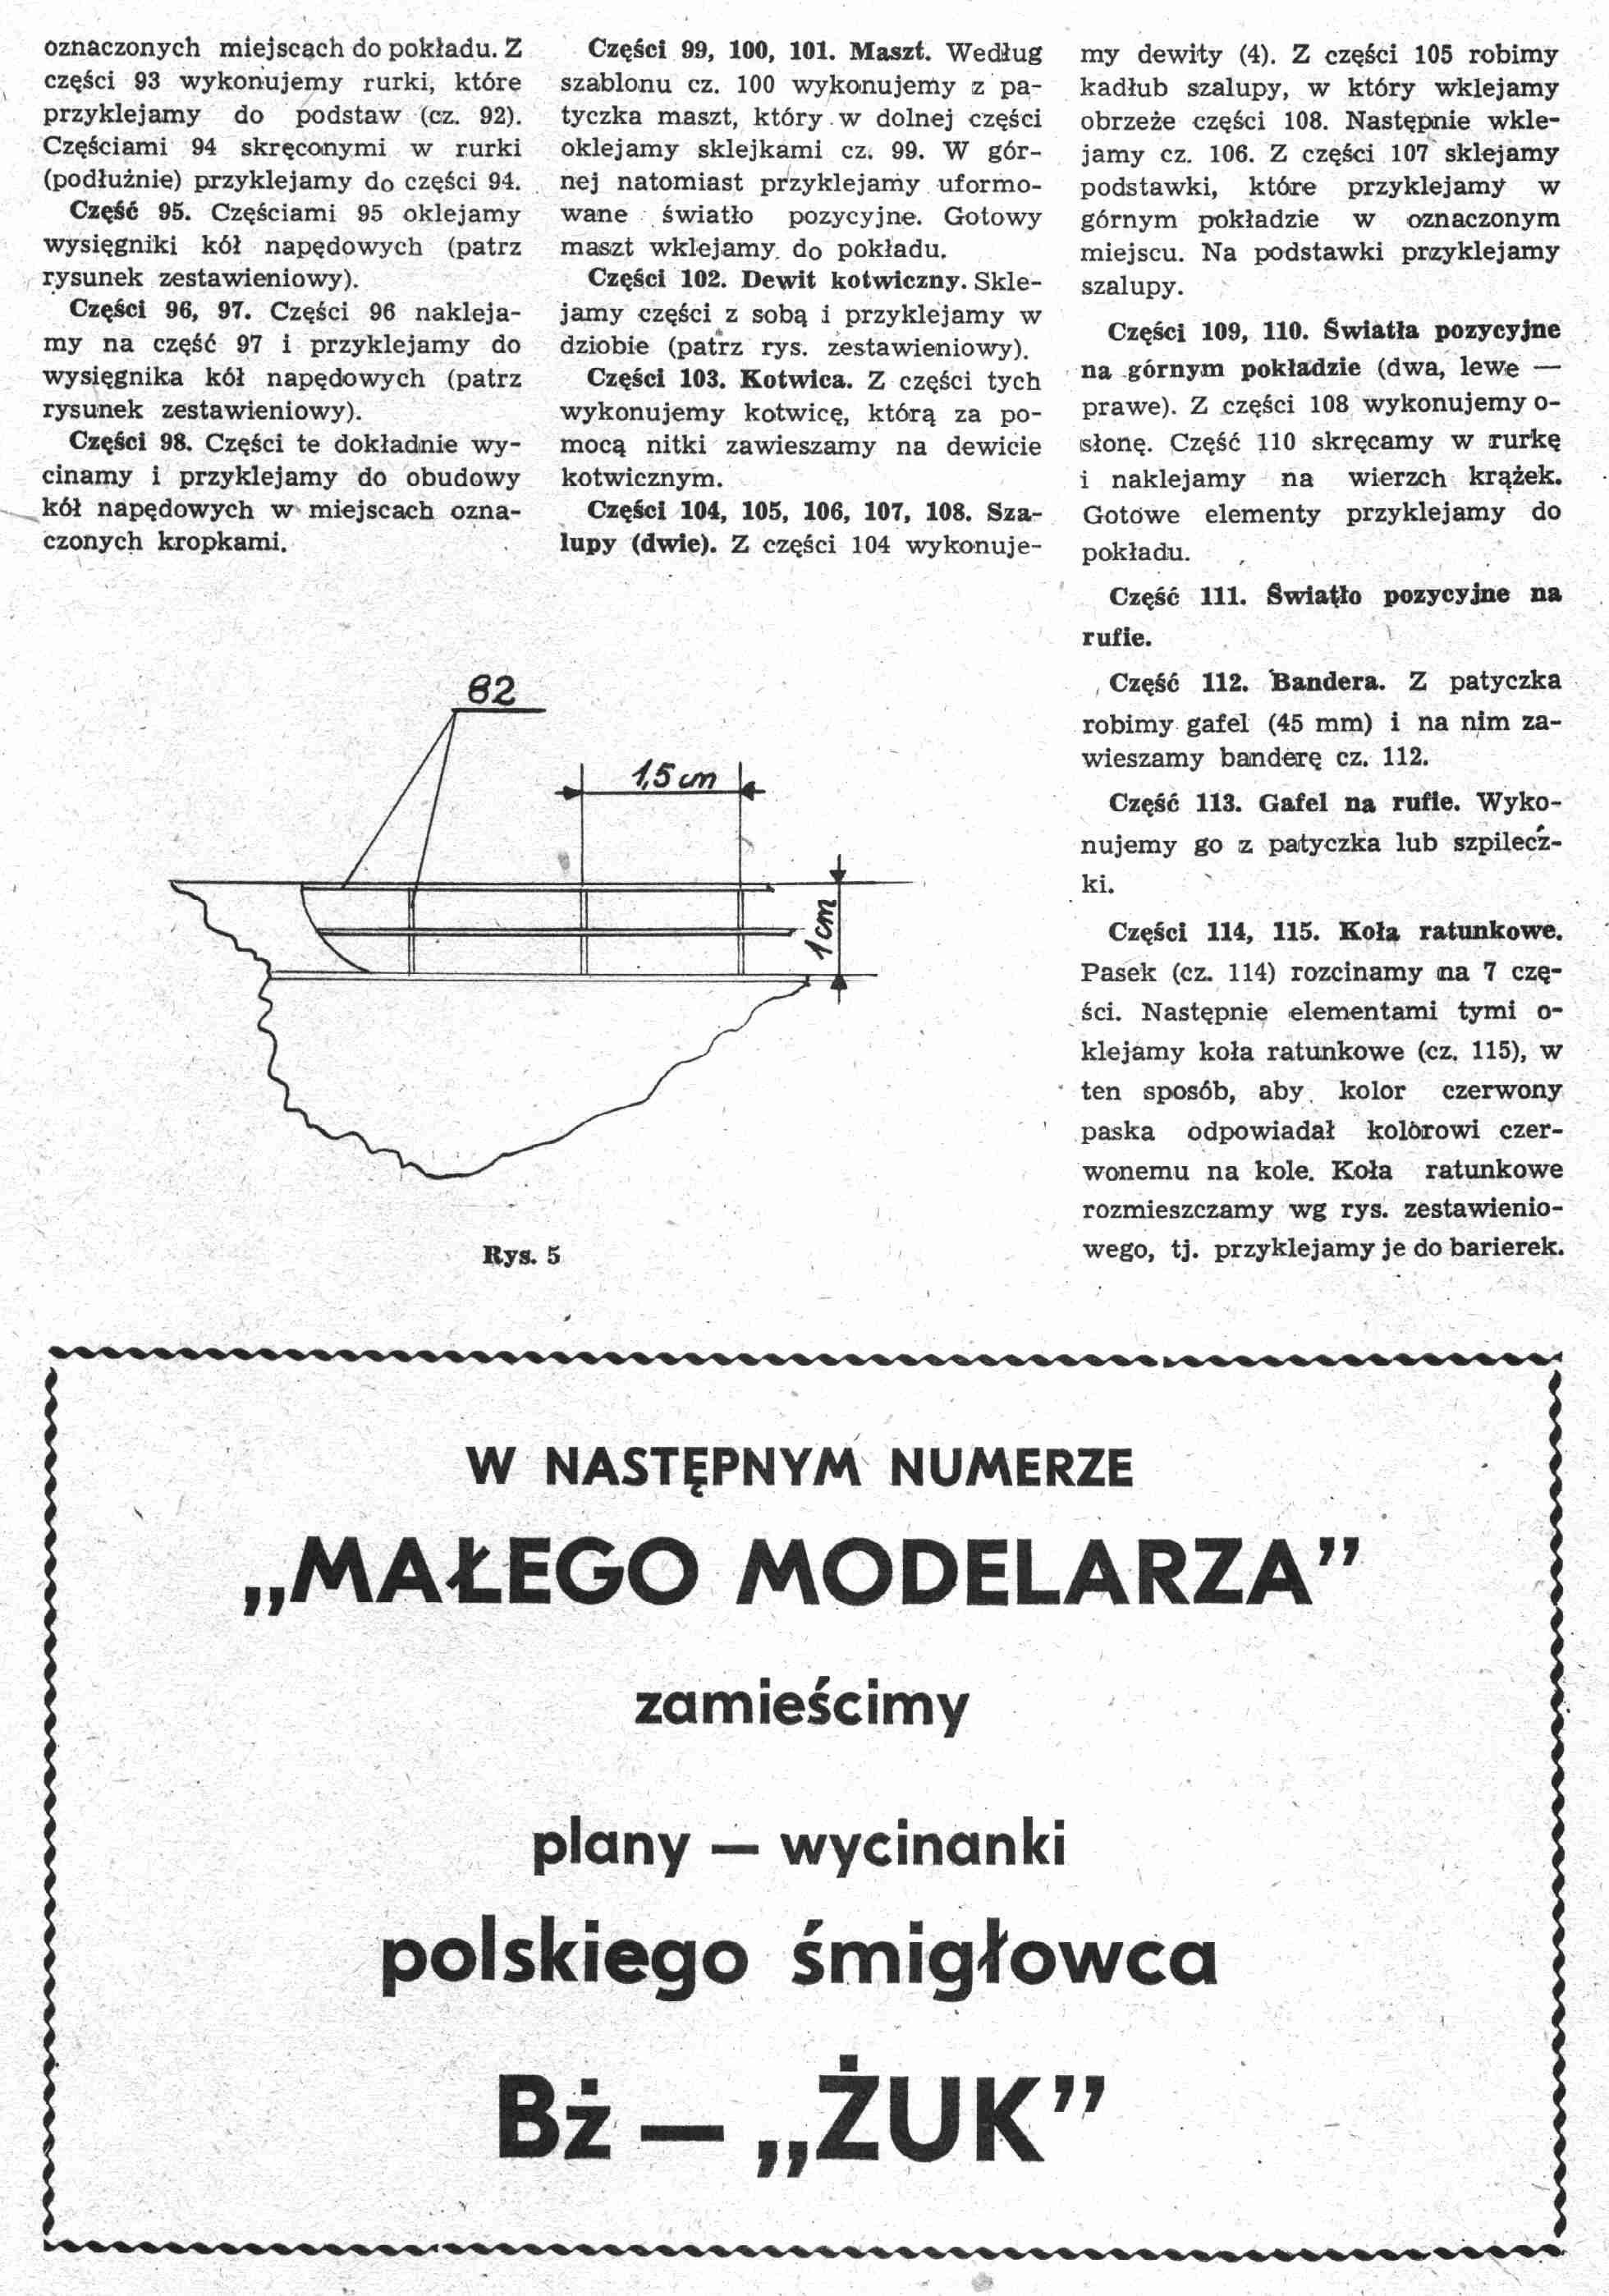 "Maly Modelarz" 11, 1975, 6 с.